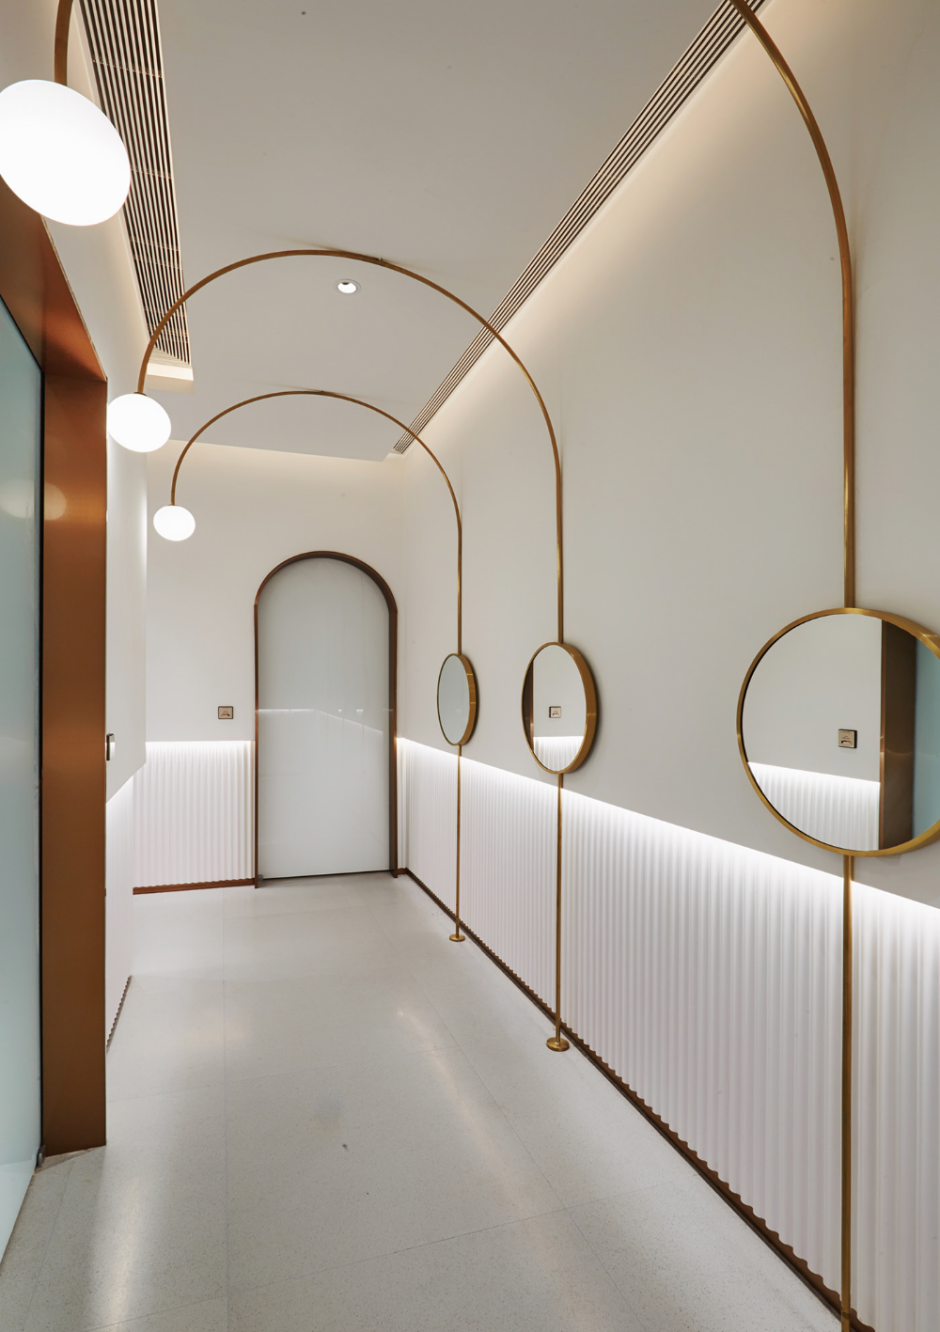 Modern corridor lighting